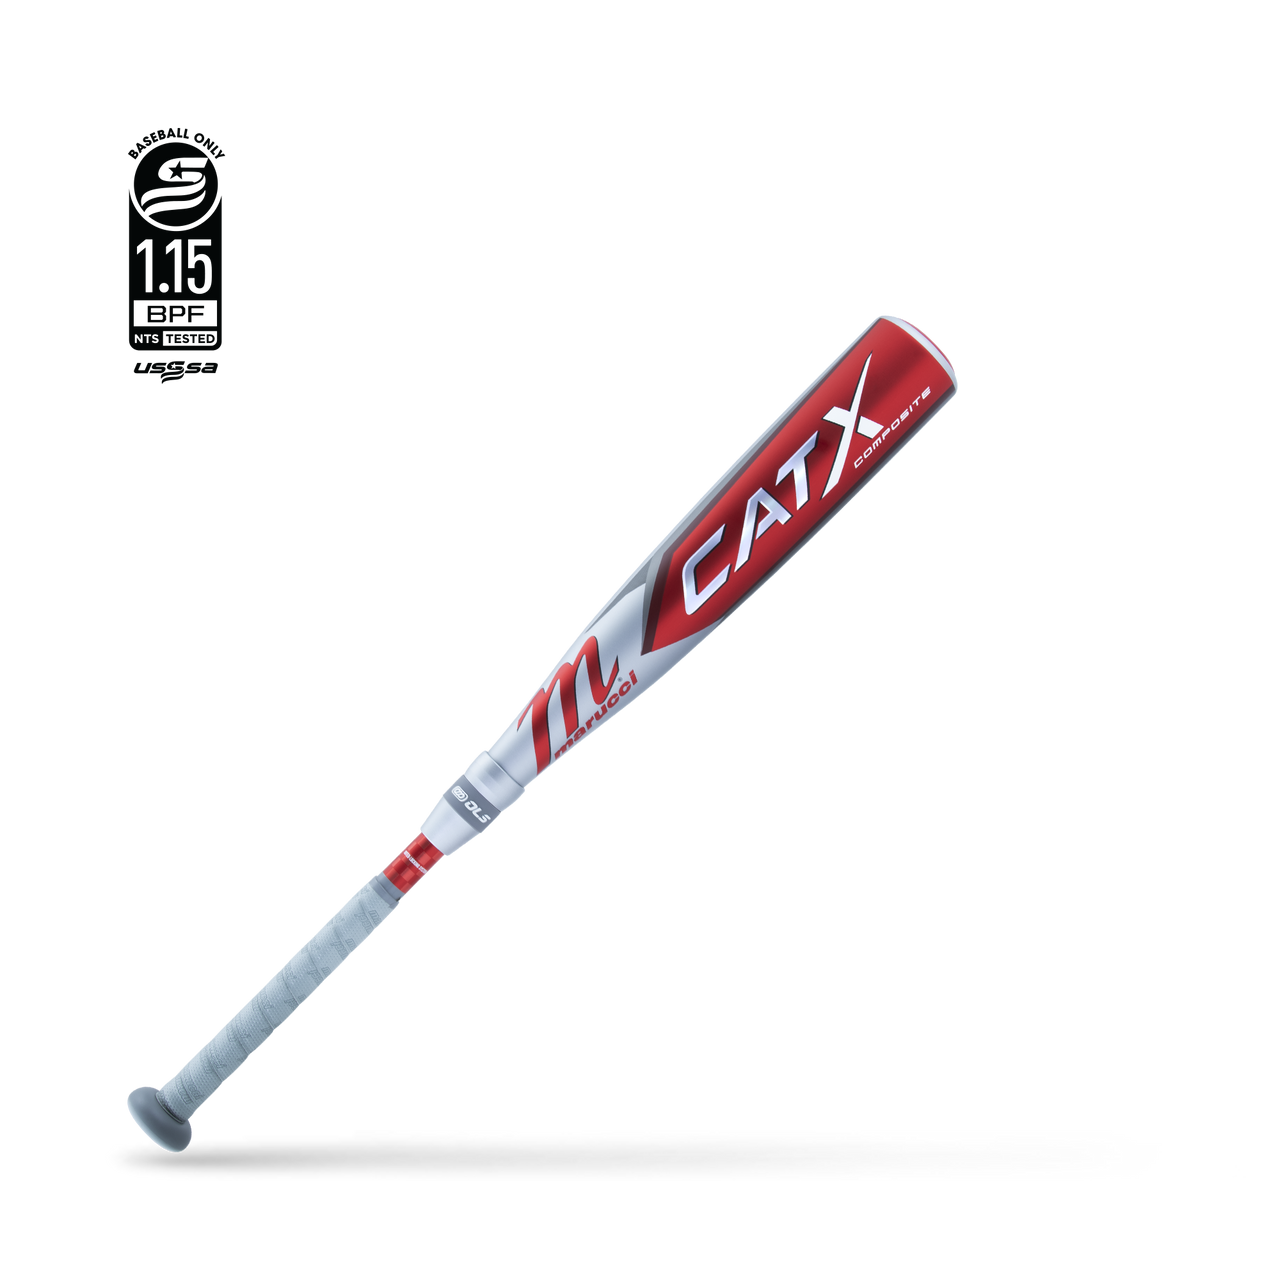 Marucci CATX Composite JBB (-10) Baseball Bat (MJBBCCPX)